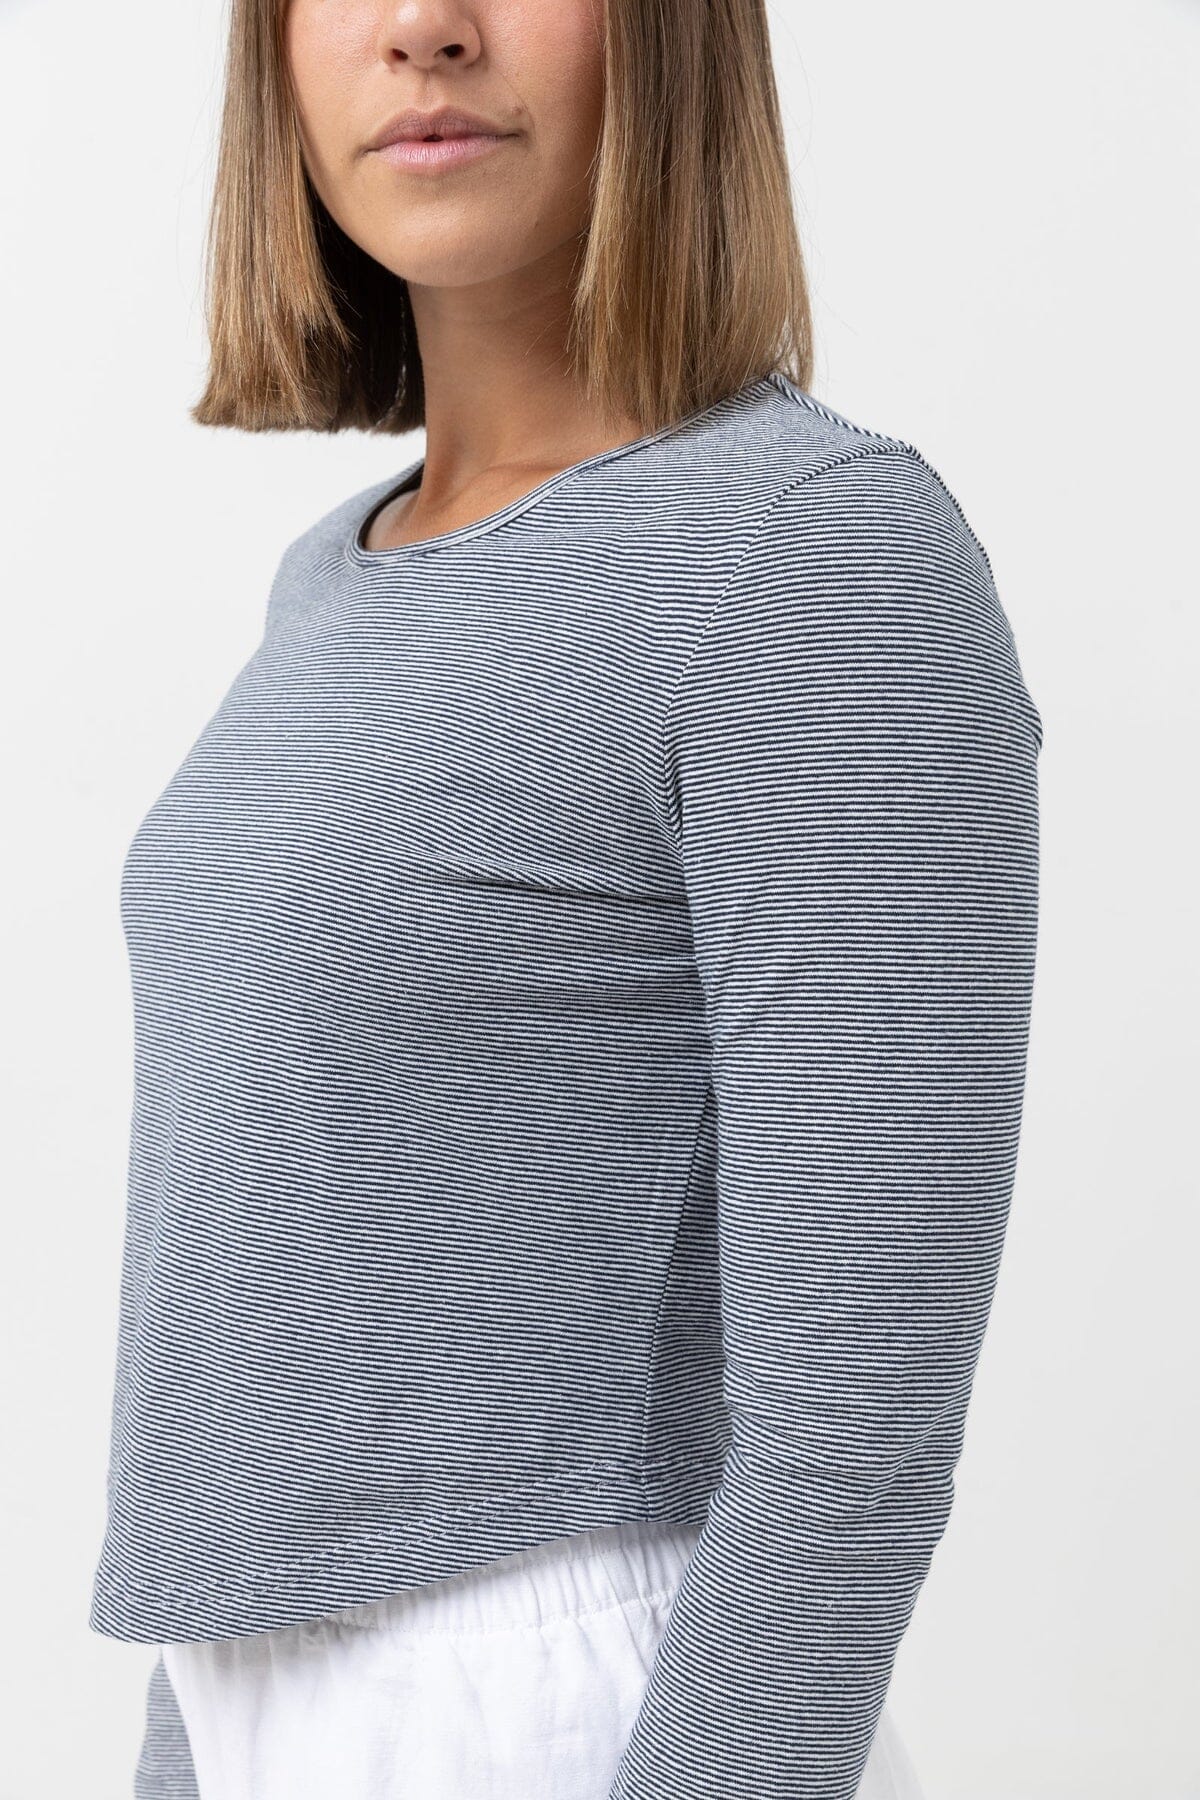 Women's DSG Outerwear Chloe Sun Long Sleeve T-Shirt Small Glacier/RT Aspect Sky